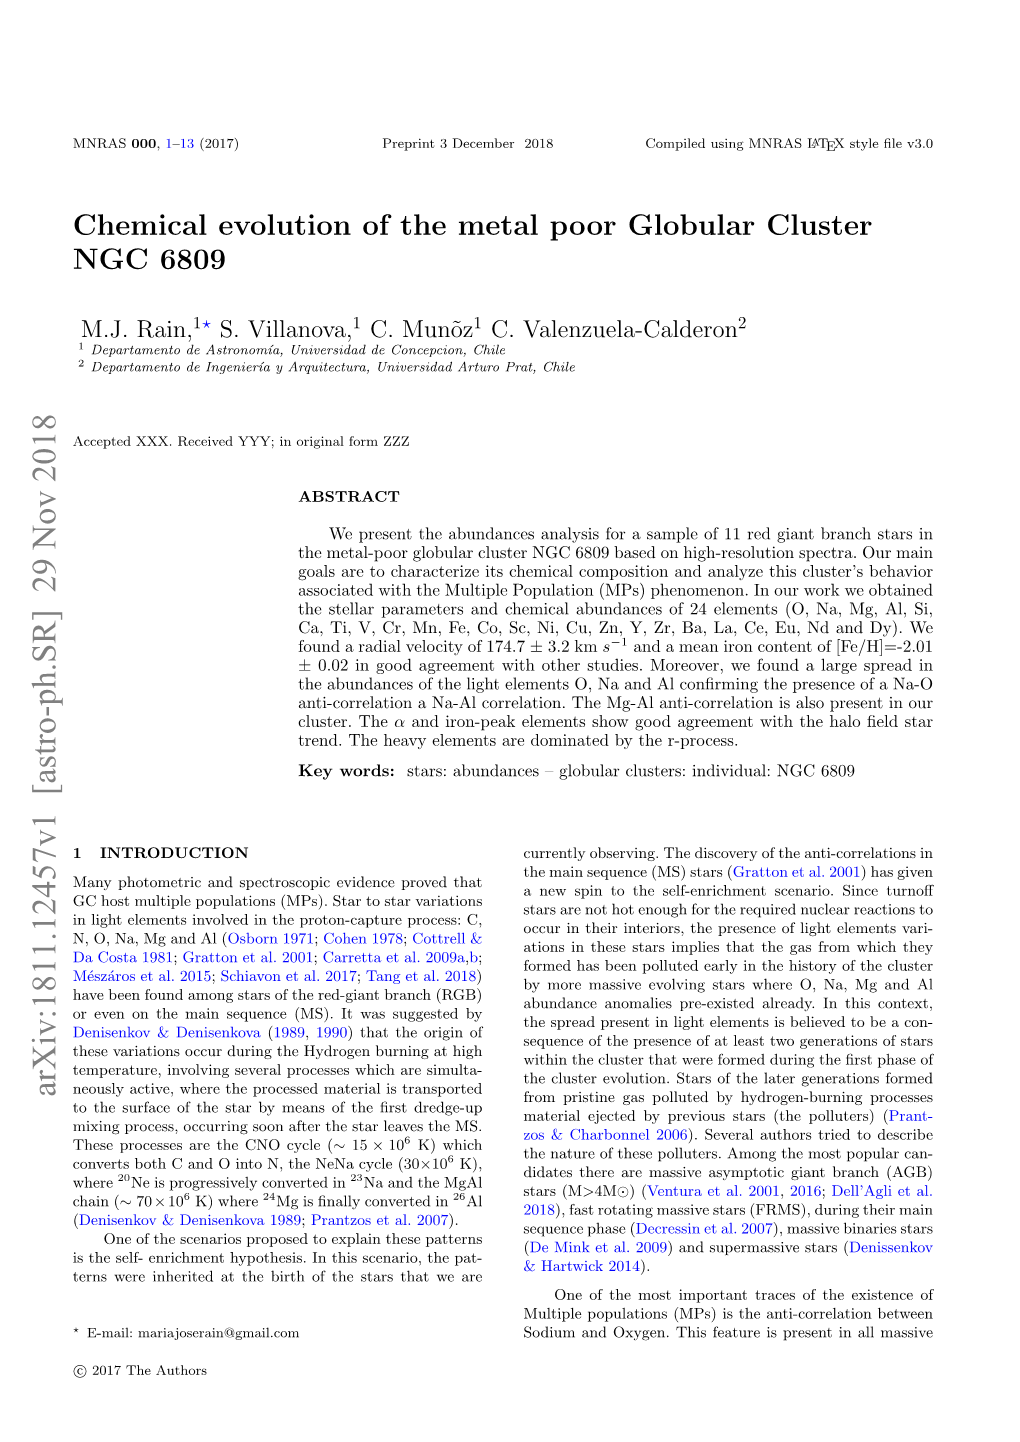 Chemical Evolution of the Metal Poor Globular Cluster NGC 6809